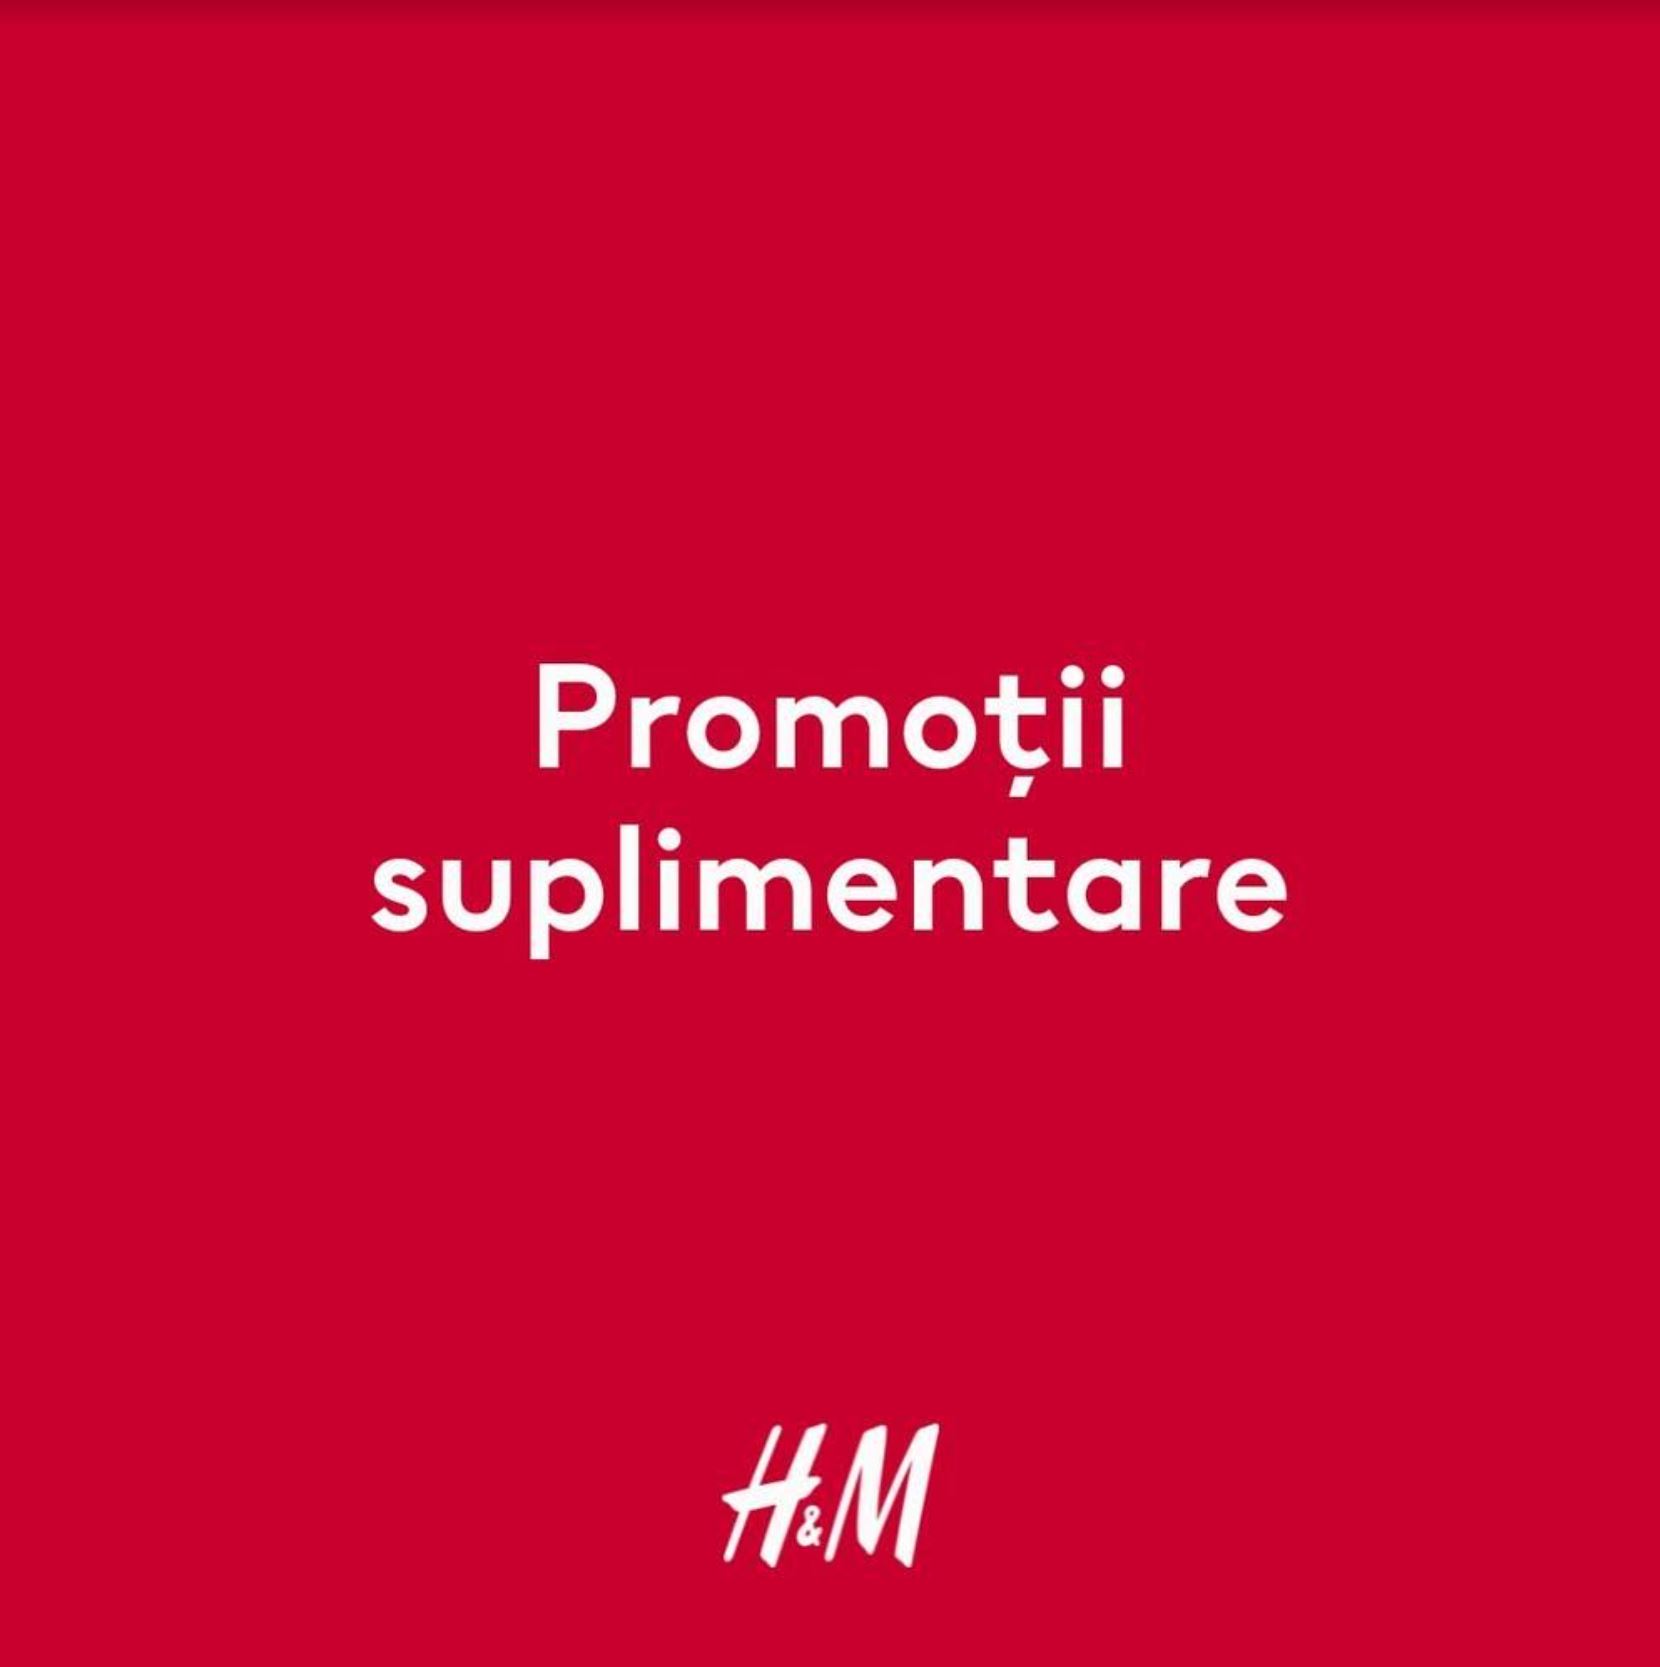 H&M – promotii suplimentare